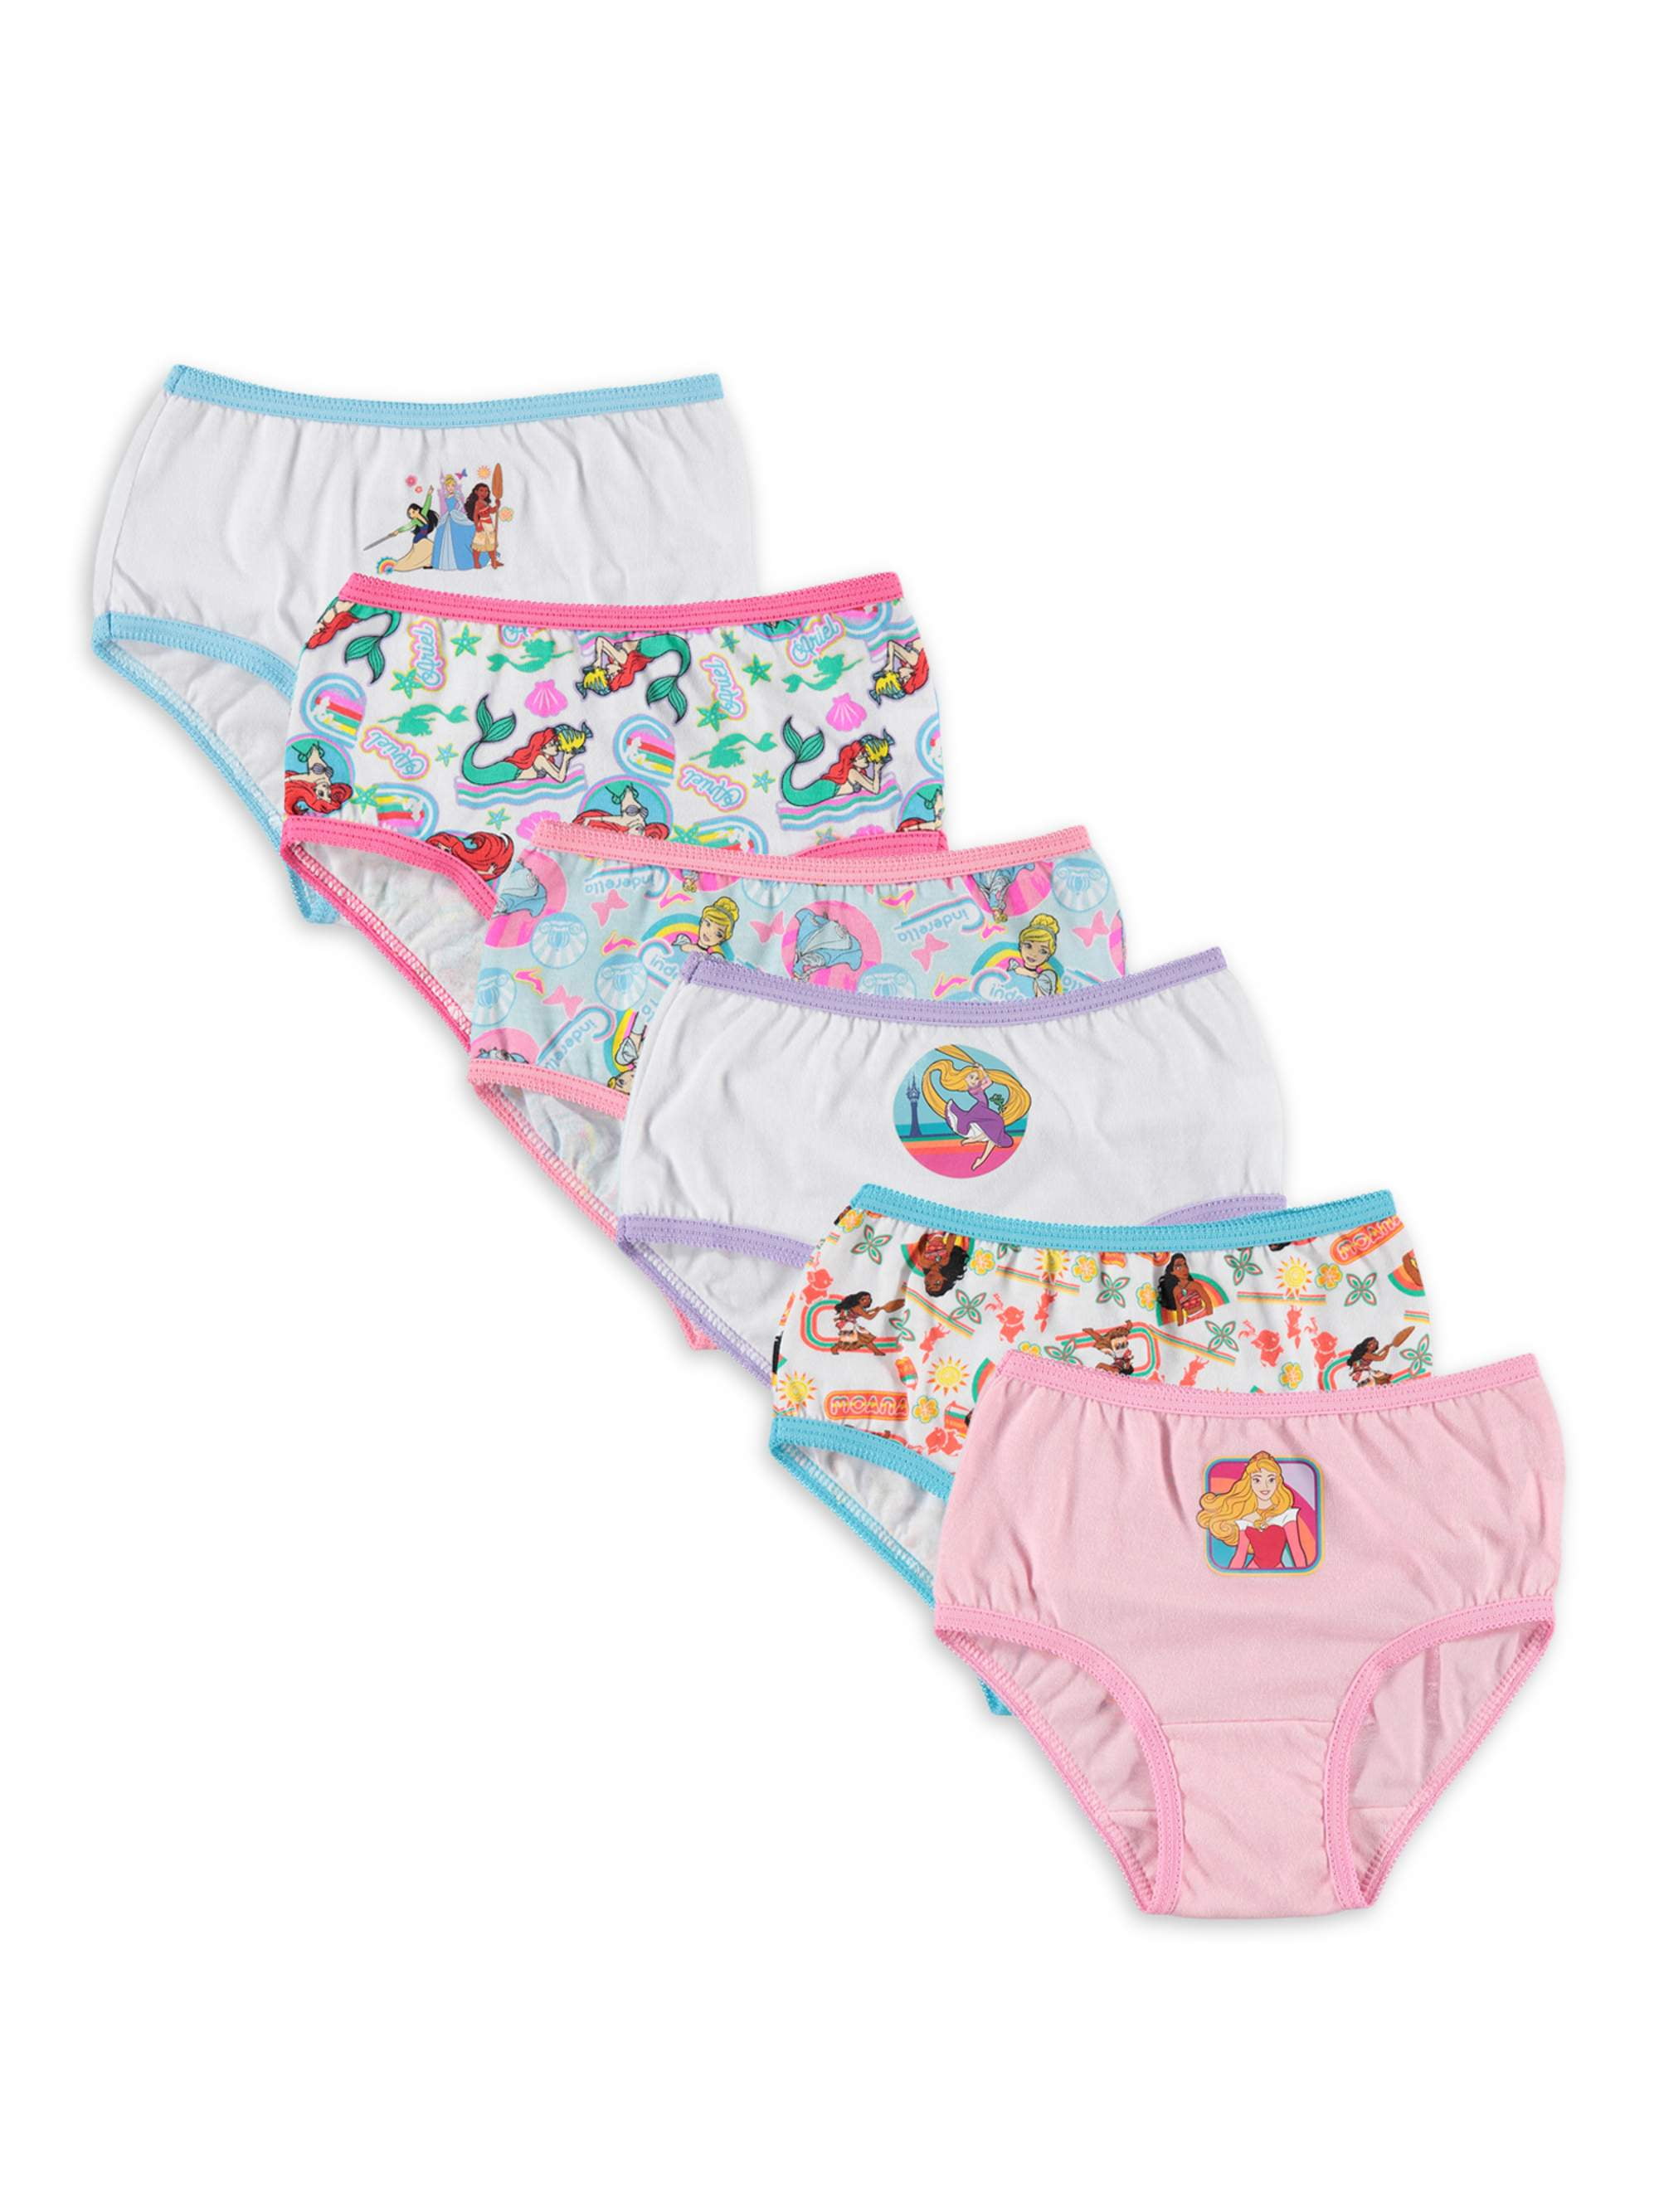 YUMILY 2-8 Years Girl's Pincess Boyshort Panties Toddler Character  Underwear 5 Pack